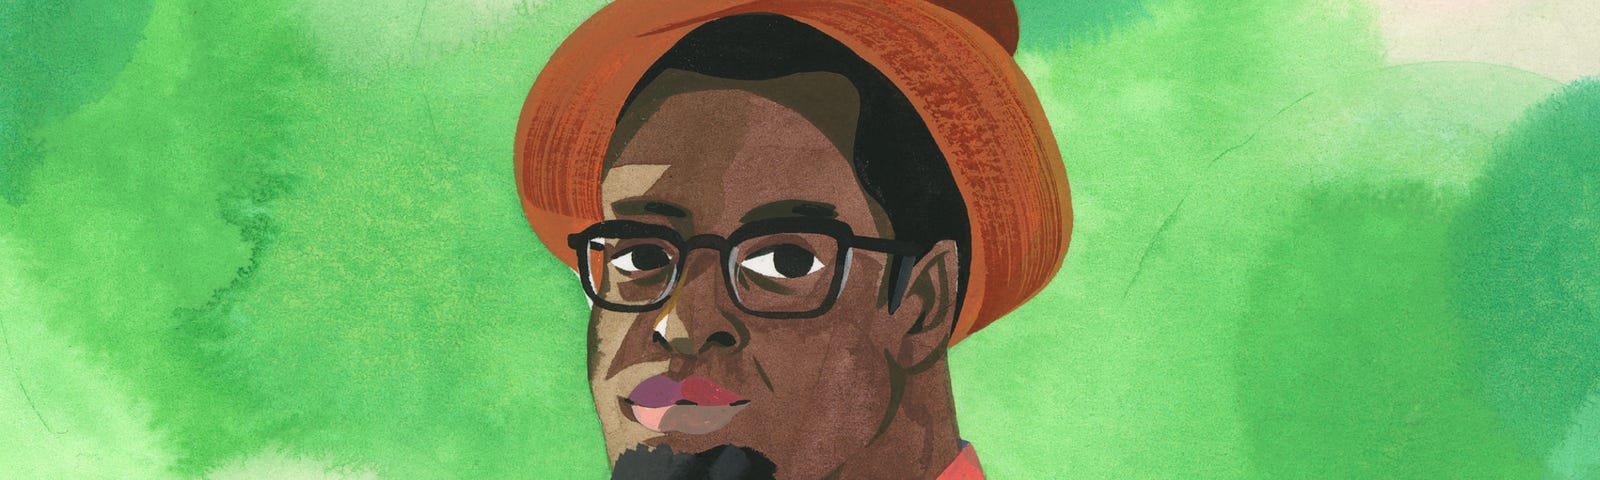 Illustrated portrait of Sabelo Mhlambi.